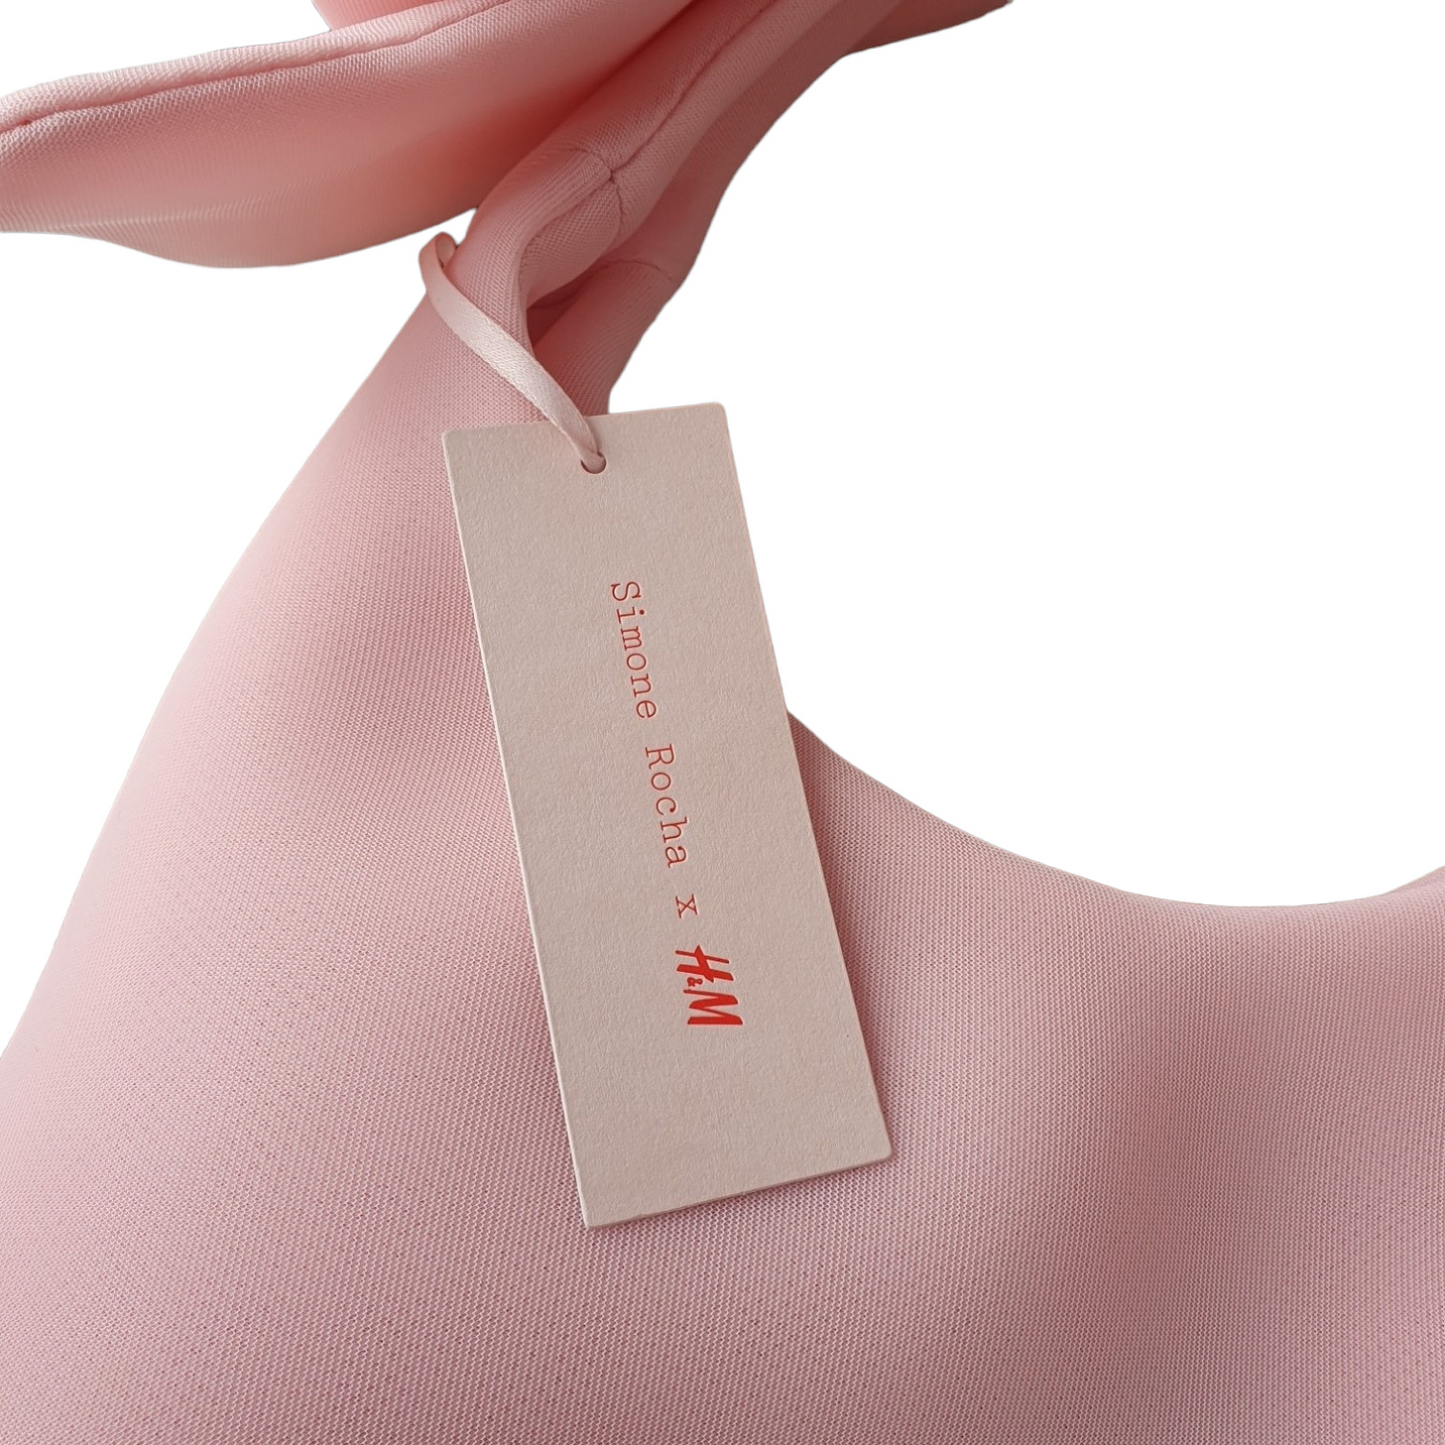 Simone Rocha/H&M collab Baby pink oversized bag